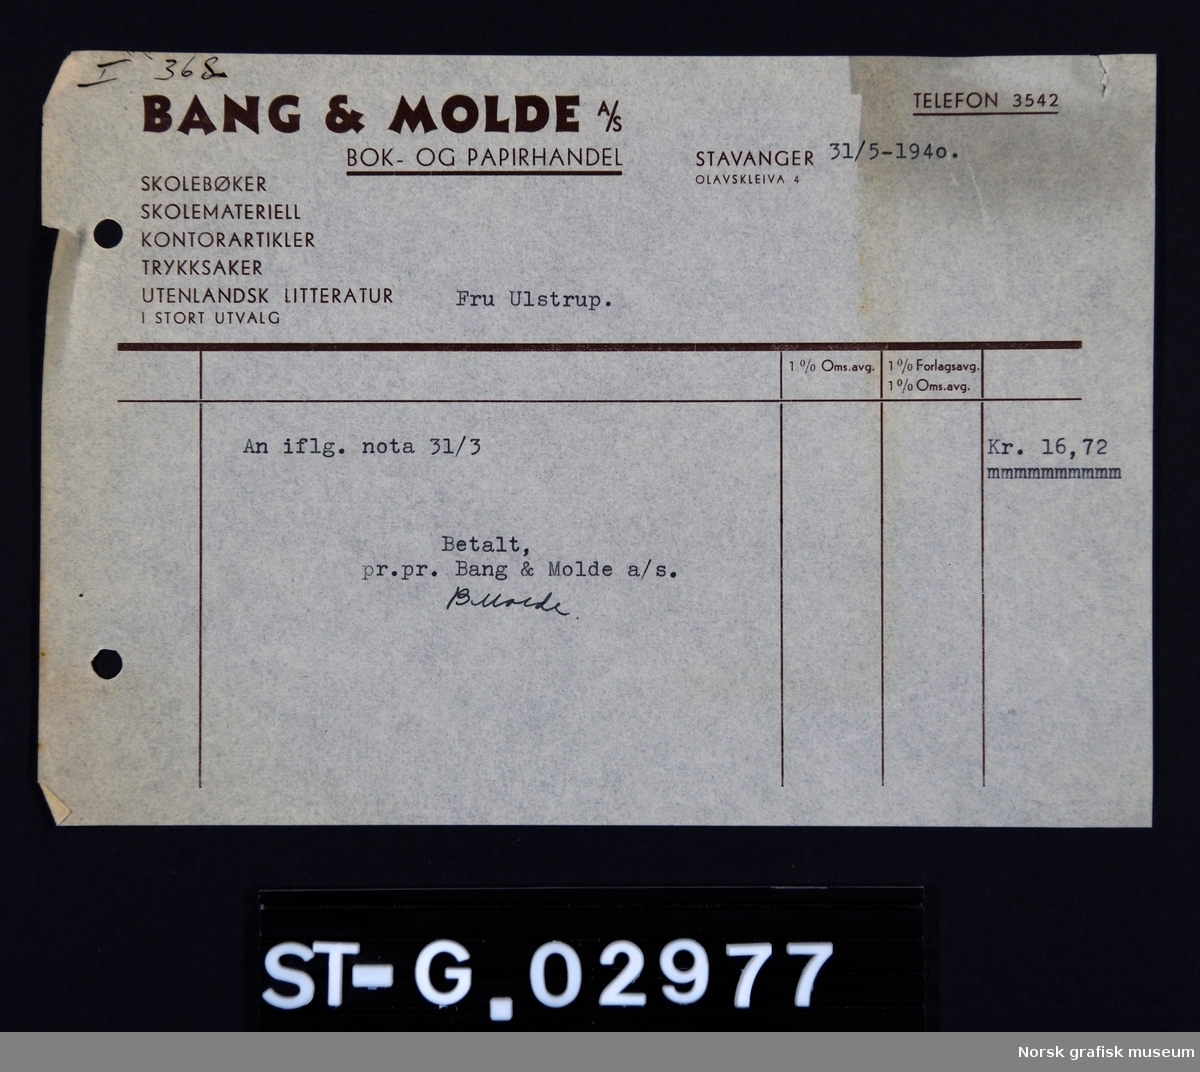 Kvittering fra Bang & Molde til Fru Ulstrup "An iflg. nota 31/3 kr 16,72 Betalt pr.pr. Bang & Molde a/s."